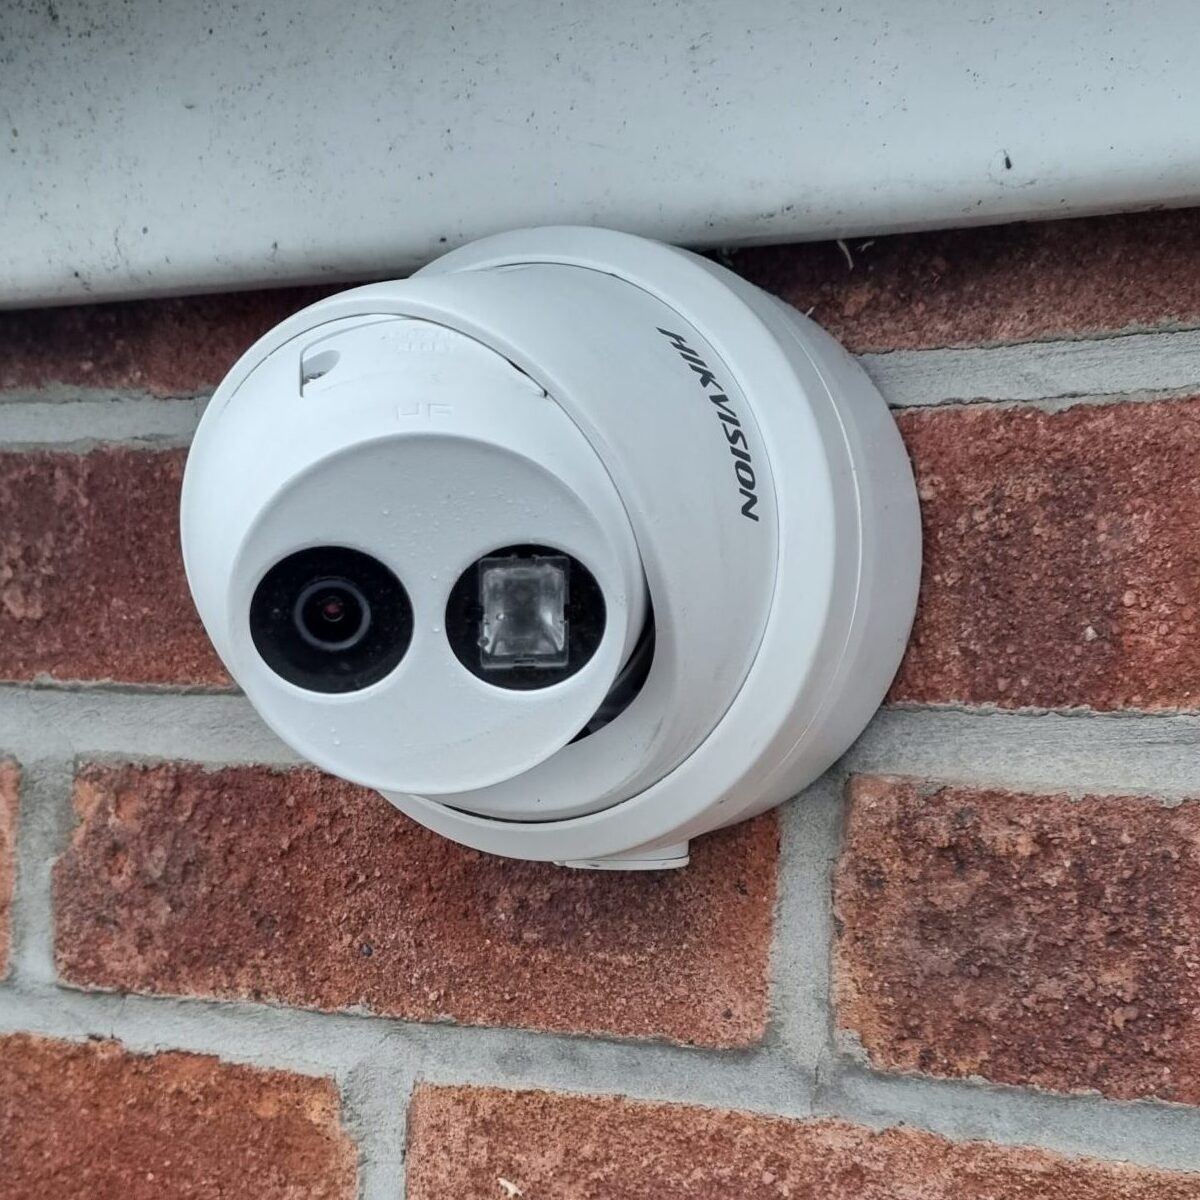 CCTV camera mounted on a brick wall